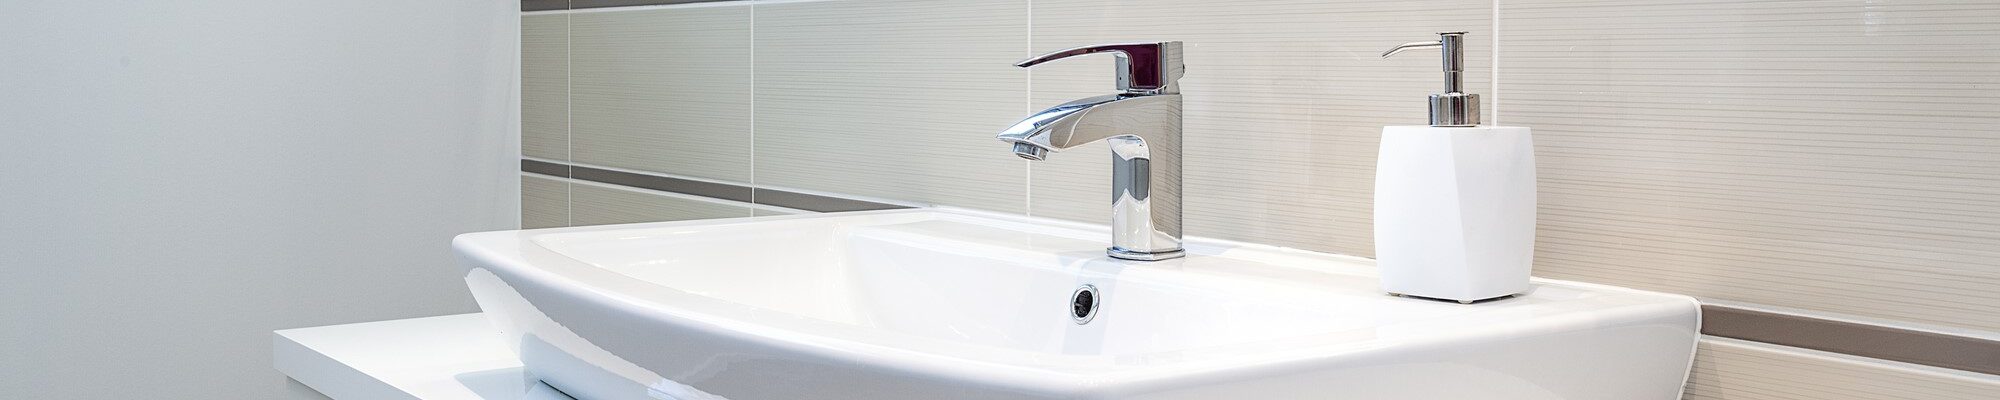 Bright space - a silver tap in a white bathroom